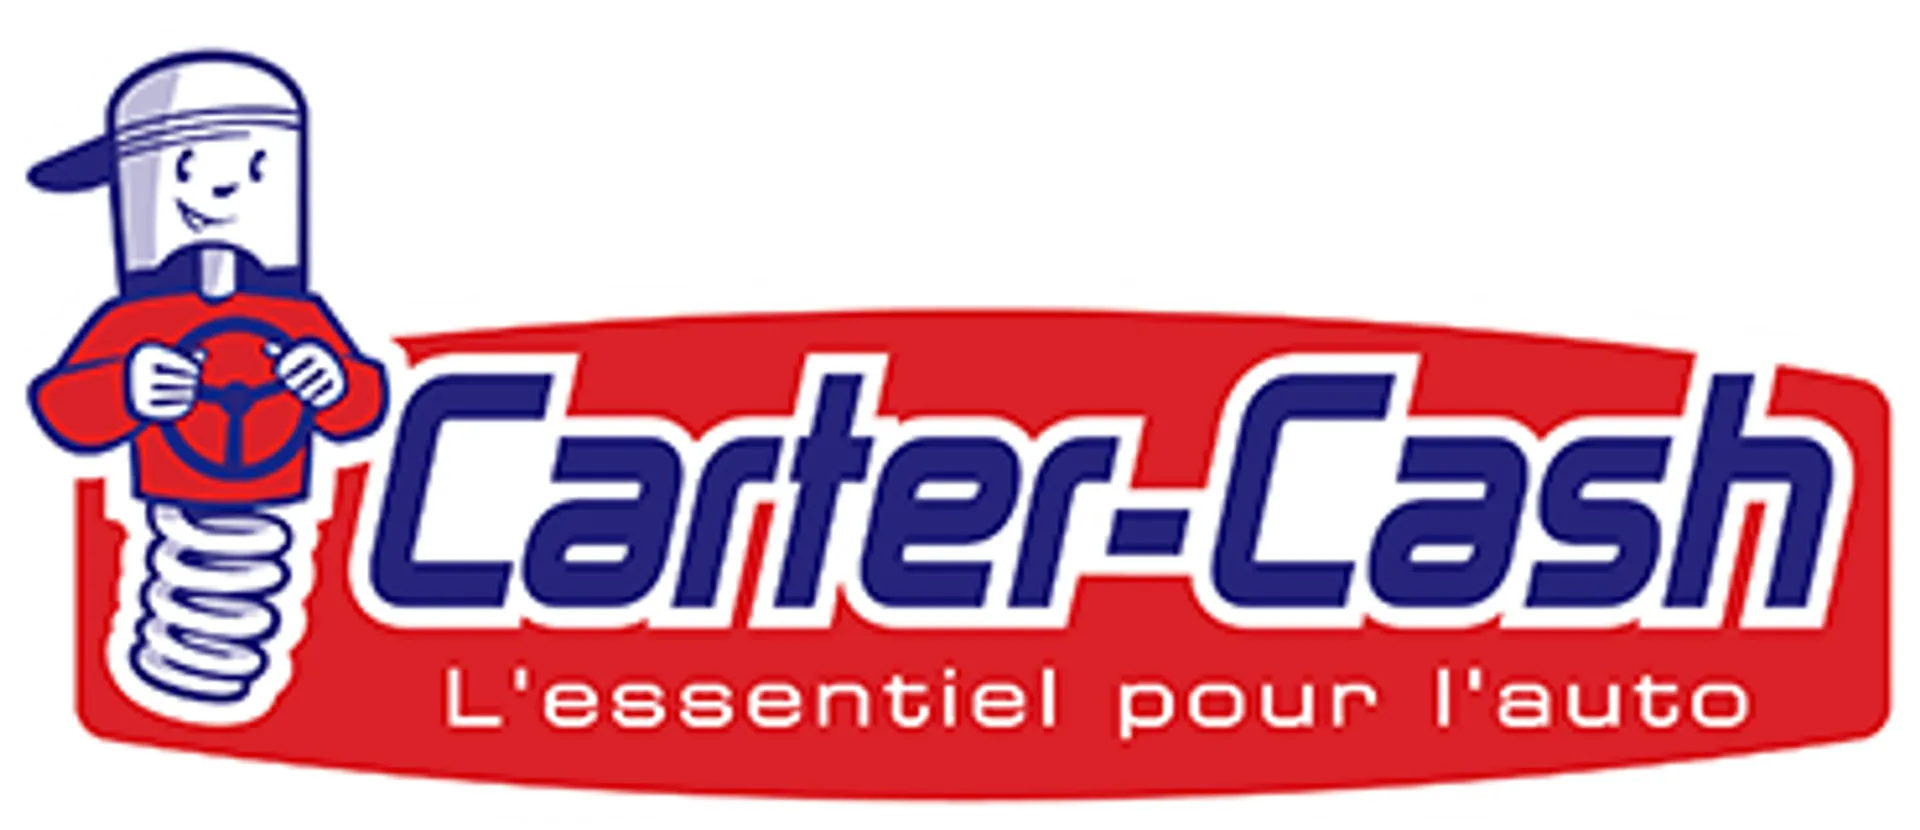 CARTER-CASH logo